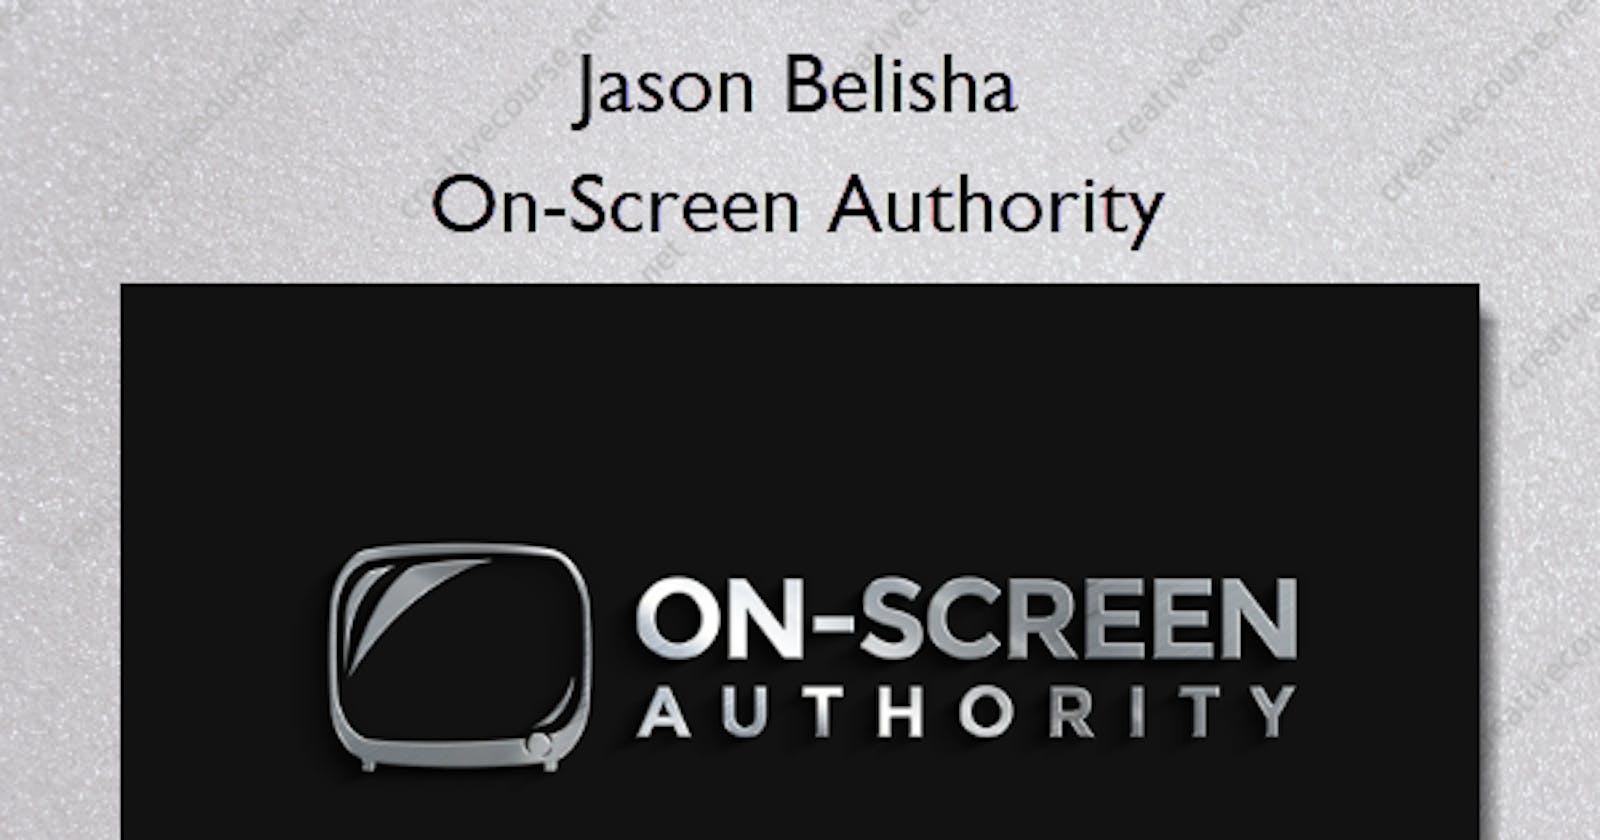 On-Screen Authority – Jason Belisha